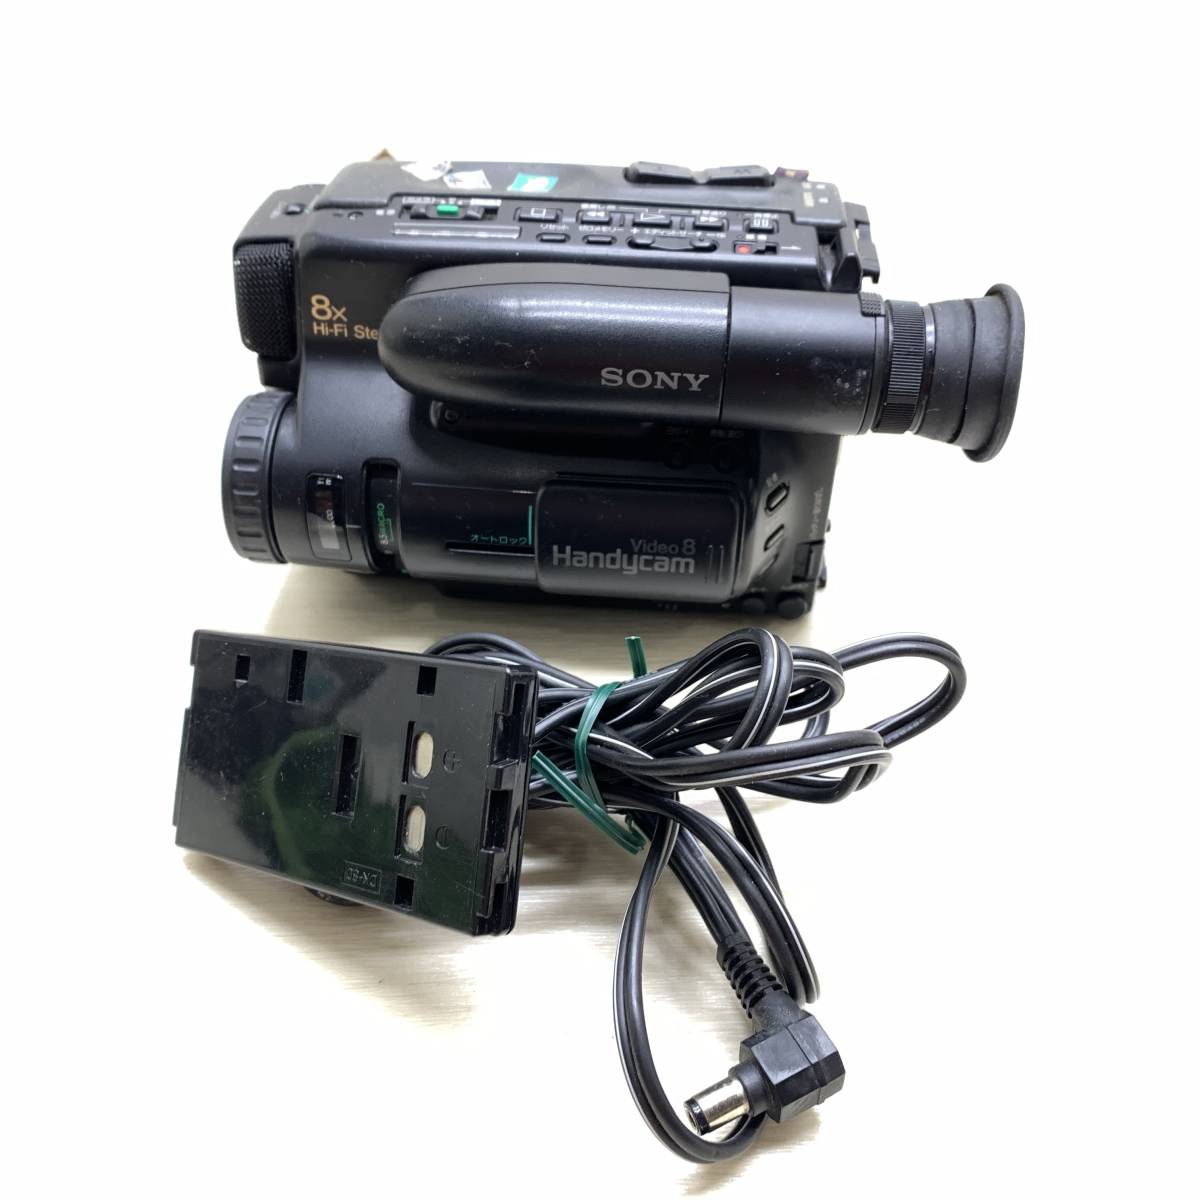 ■SONY ソニー CCD-TR75 ビデオカメラレコーダー Hi8ビデオカメラ ハンディカム 8mm Video8 ジャンク■G41498の画像1